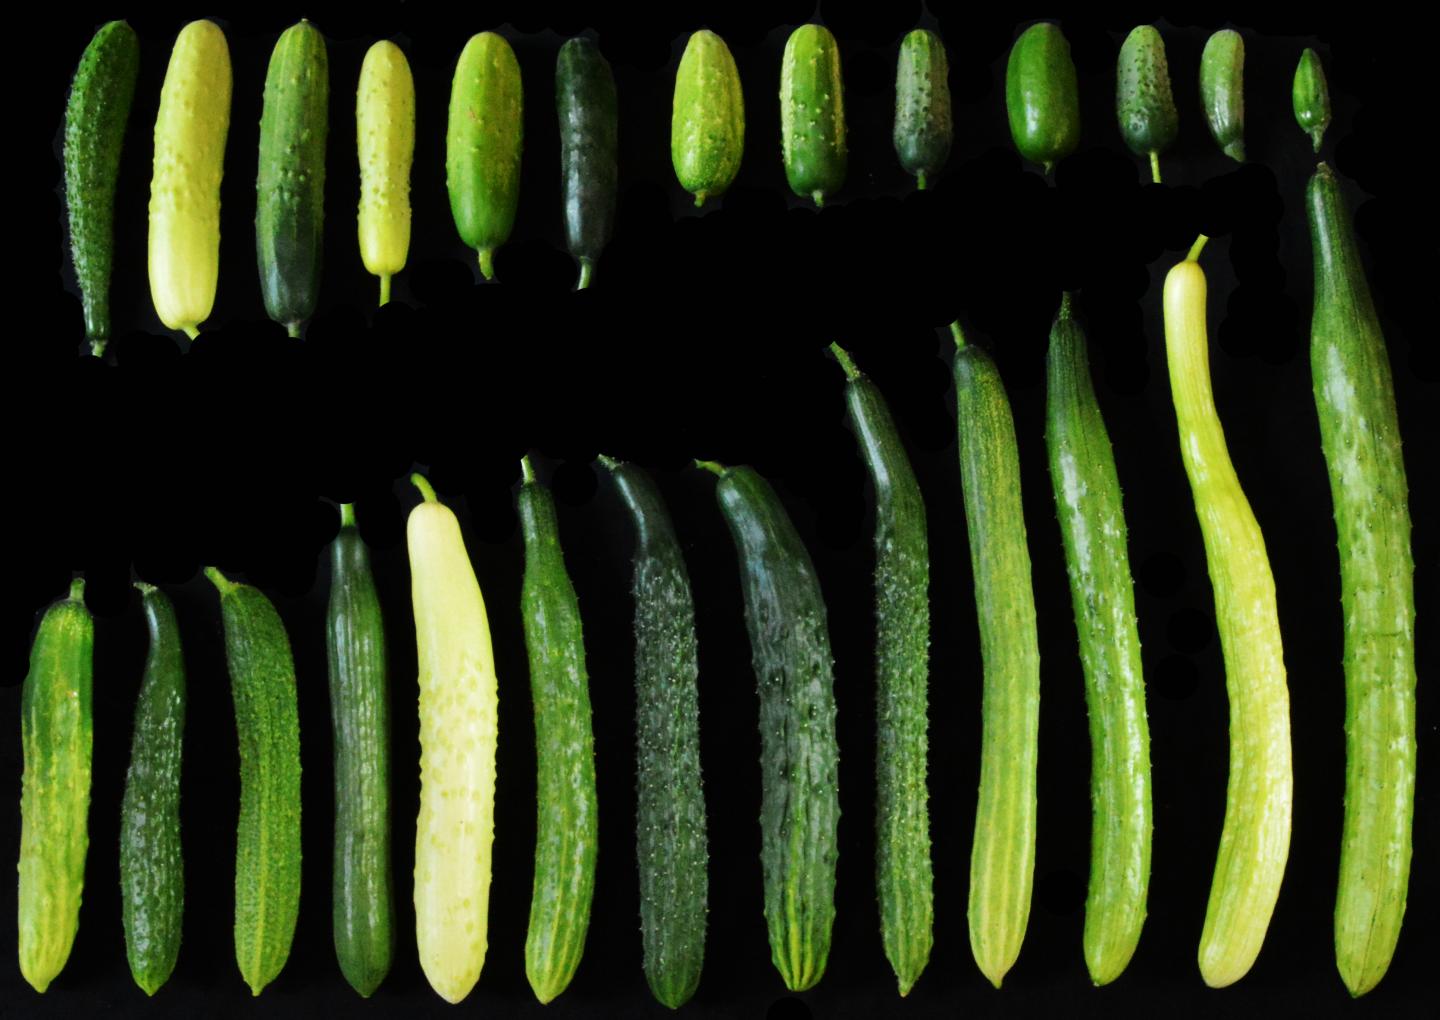 Cucumber Length Variation